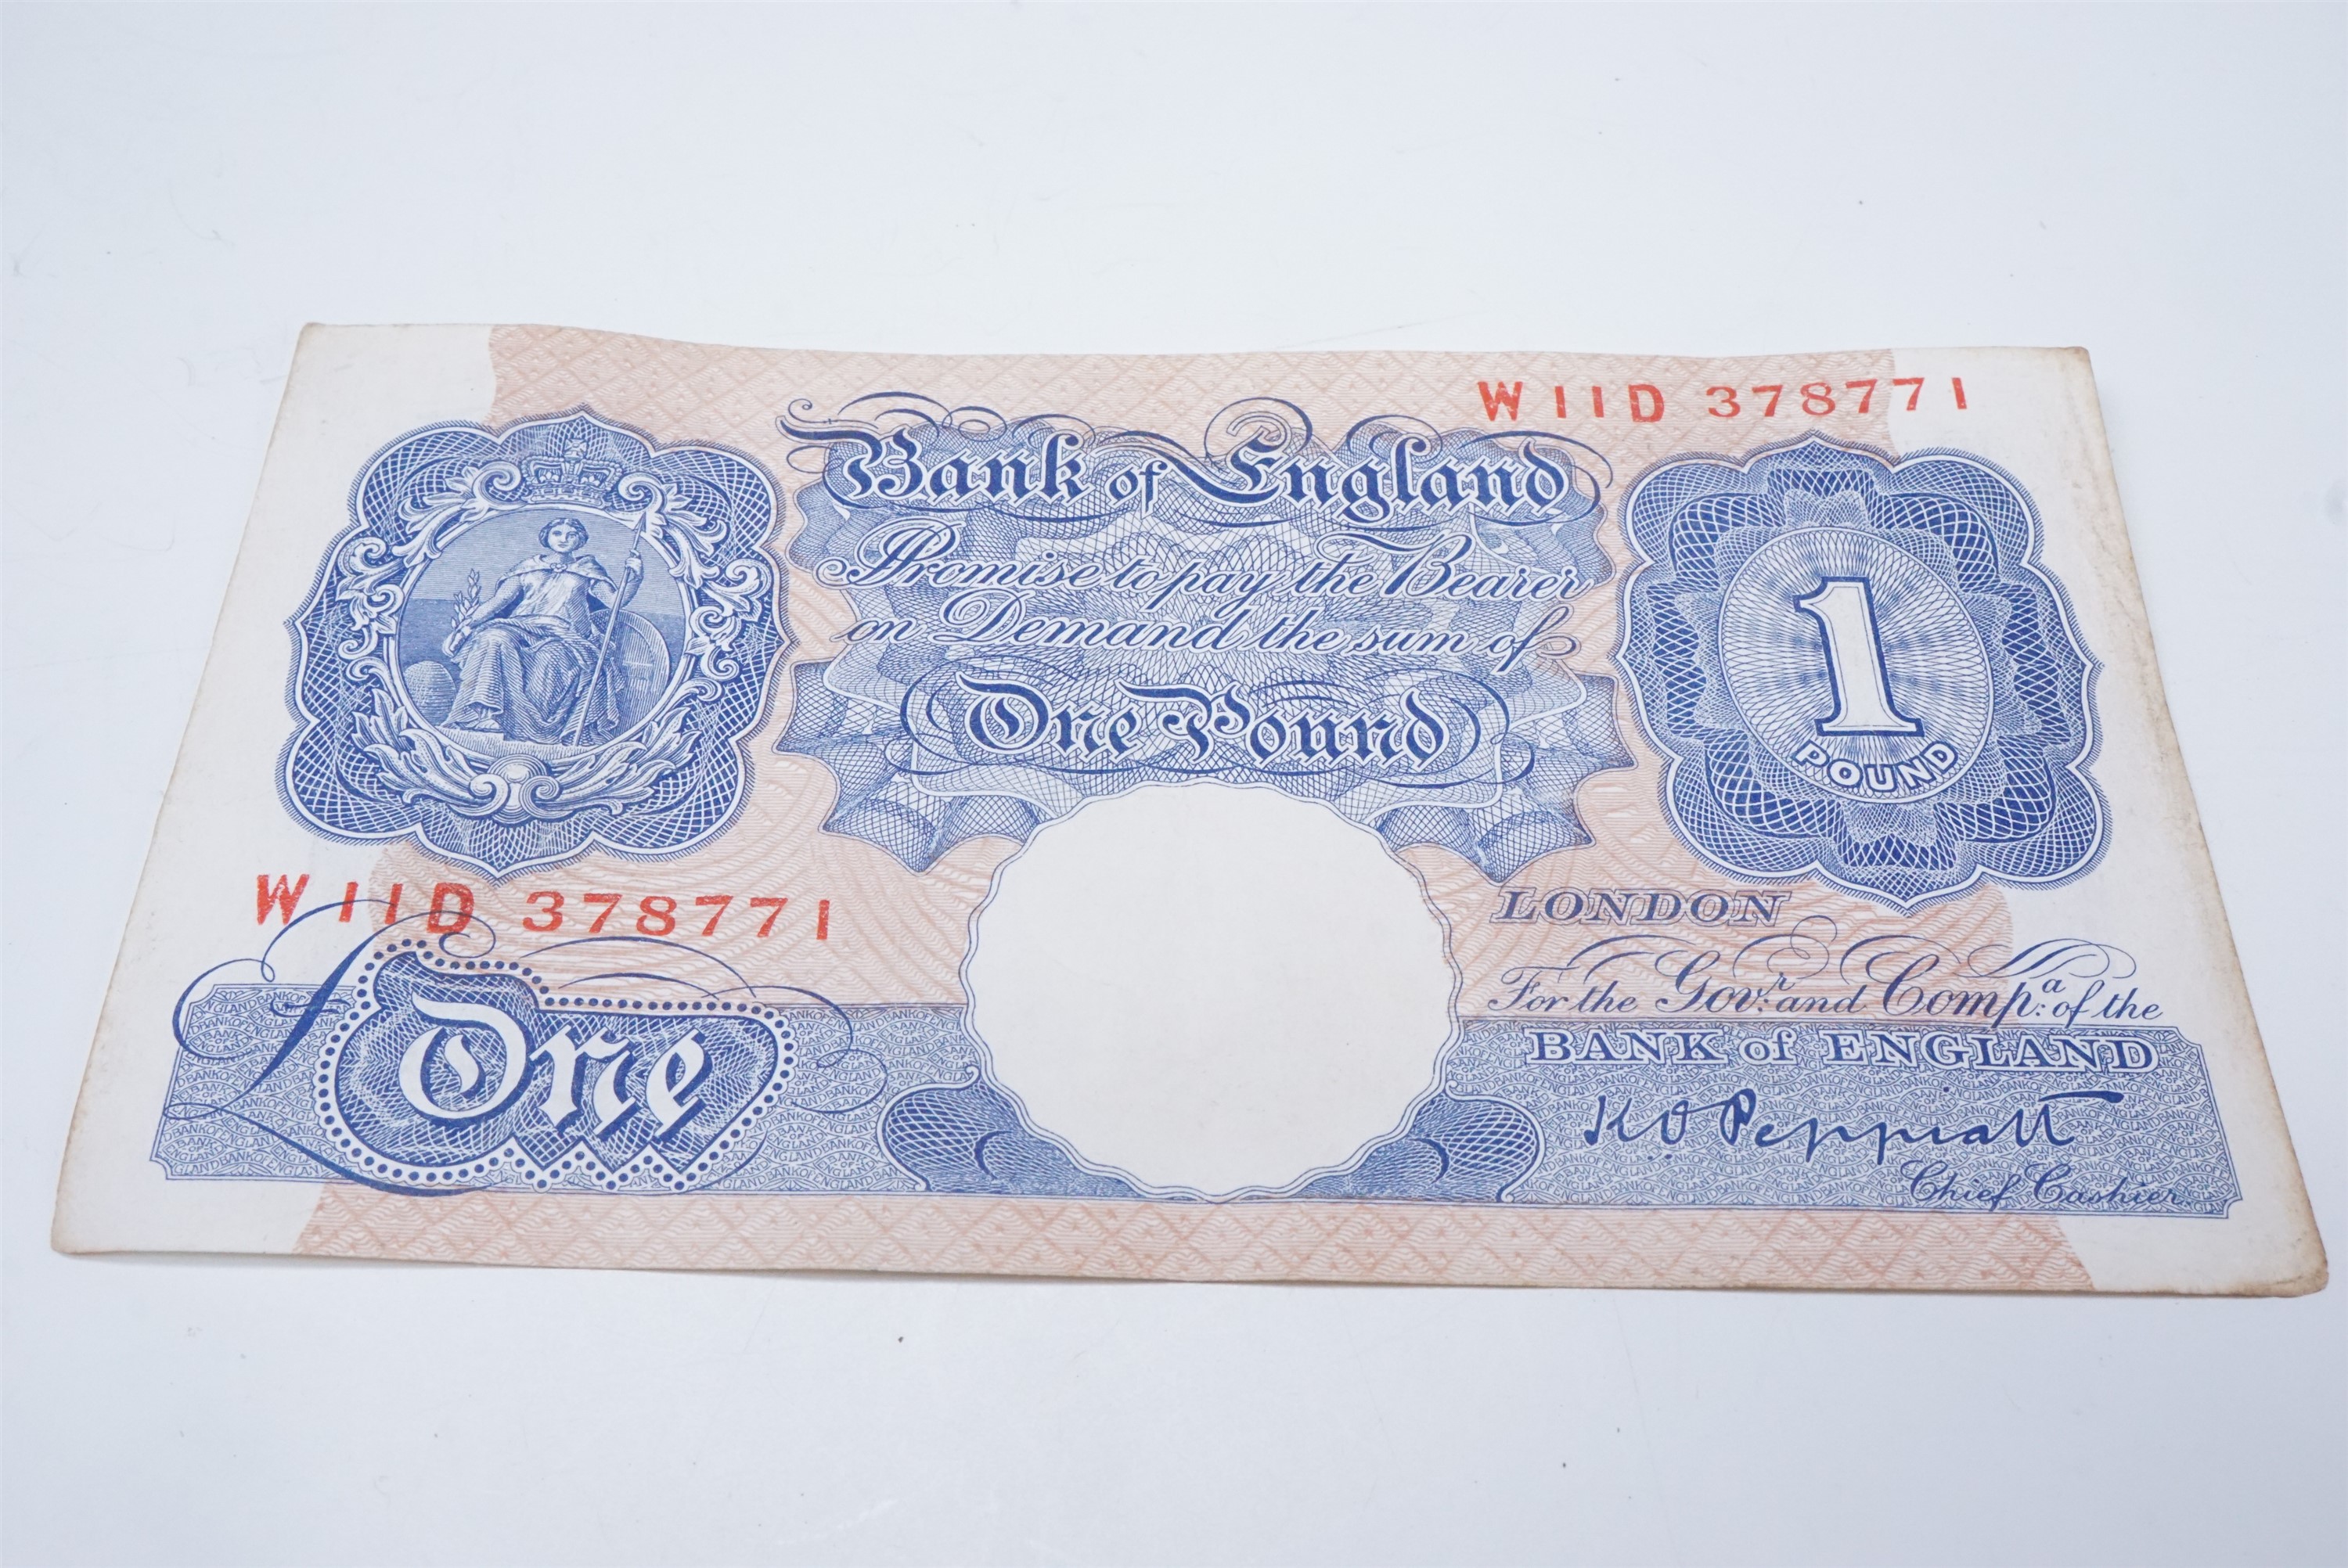 A Bank of England Peppiatt One Pound banknote, W11D 378771